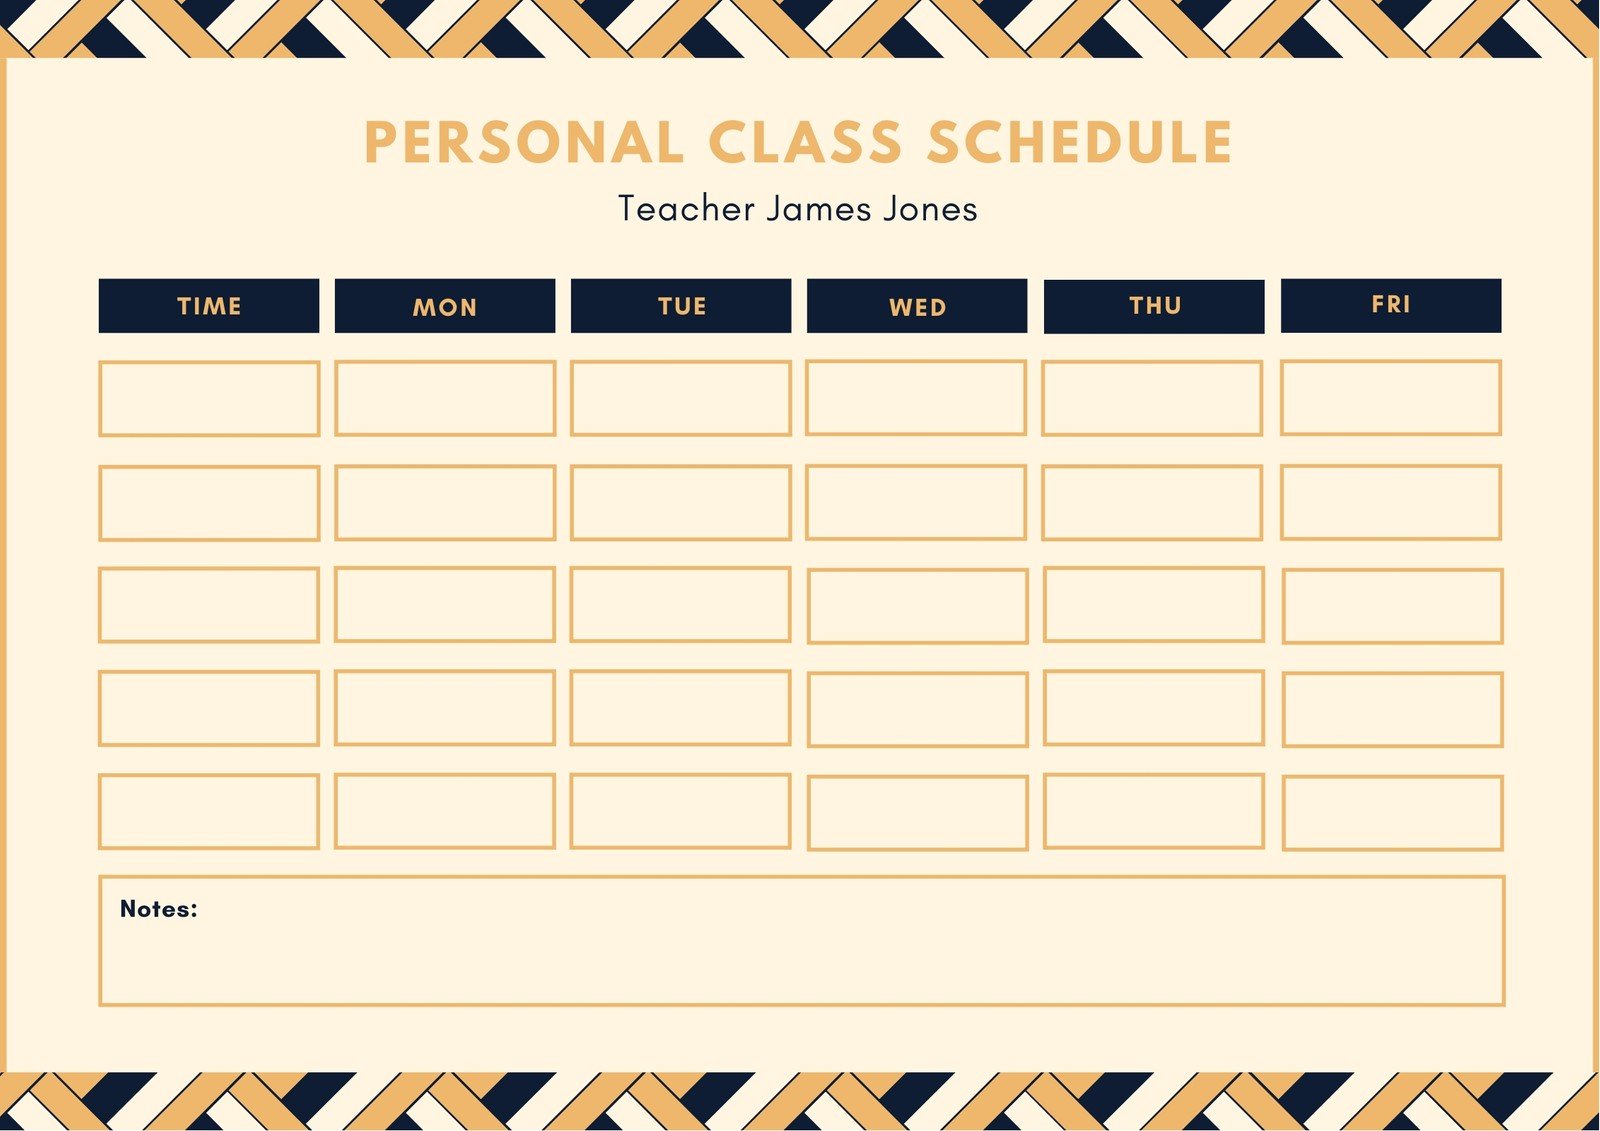 school-schedule-school-timetable-printable-schedule-class-schedule-planner-printable-and